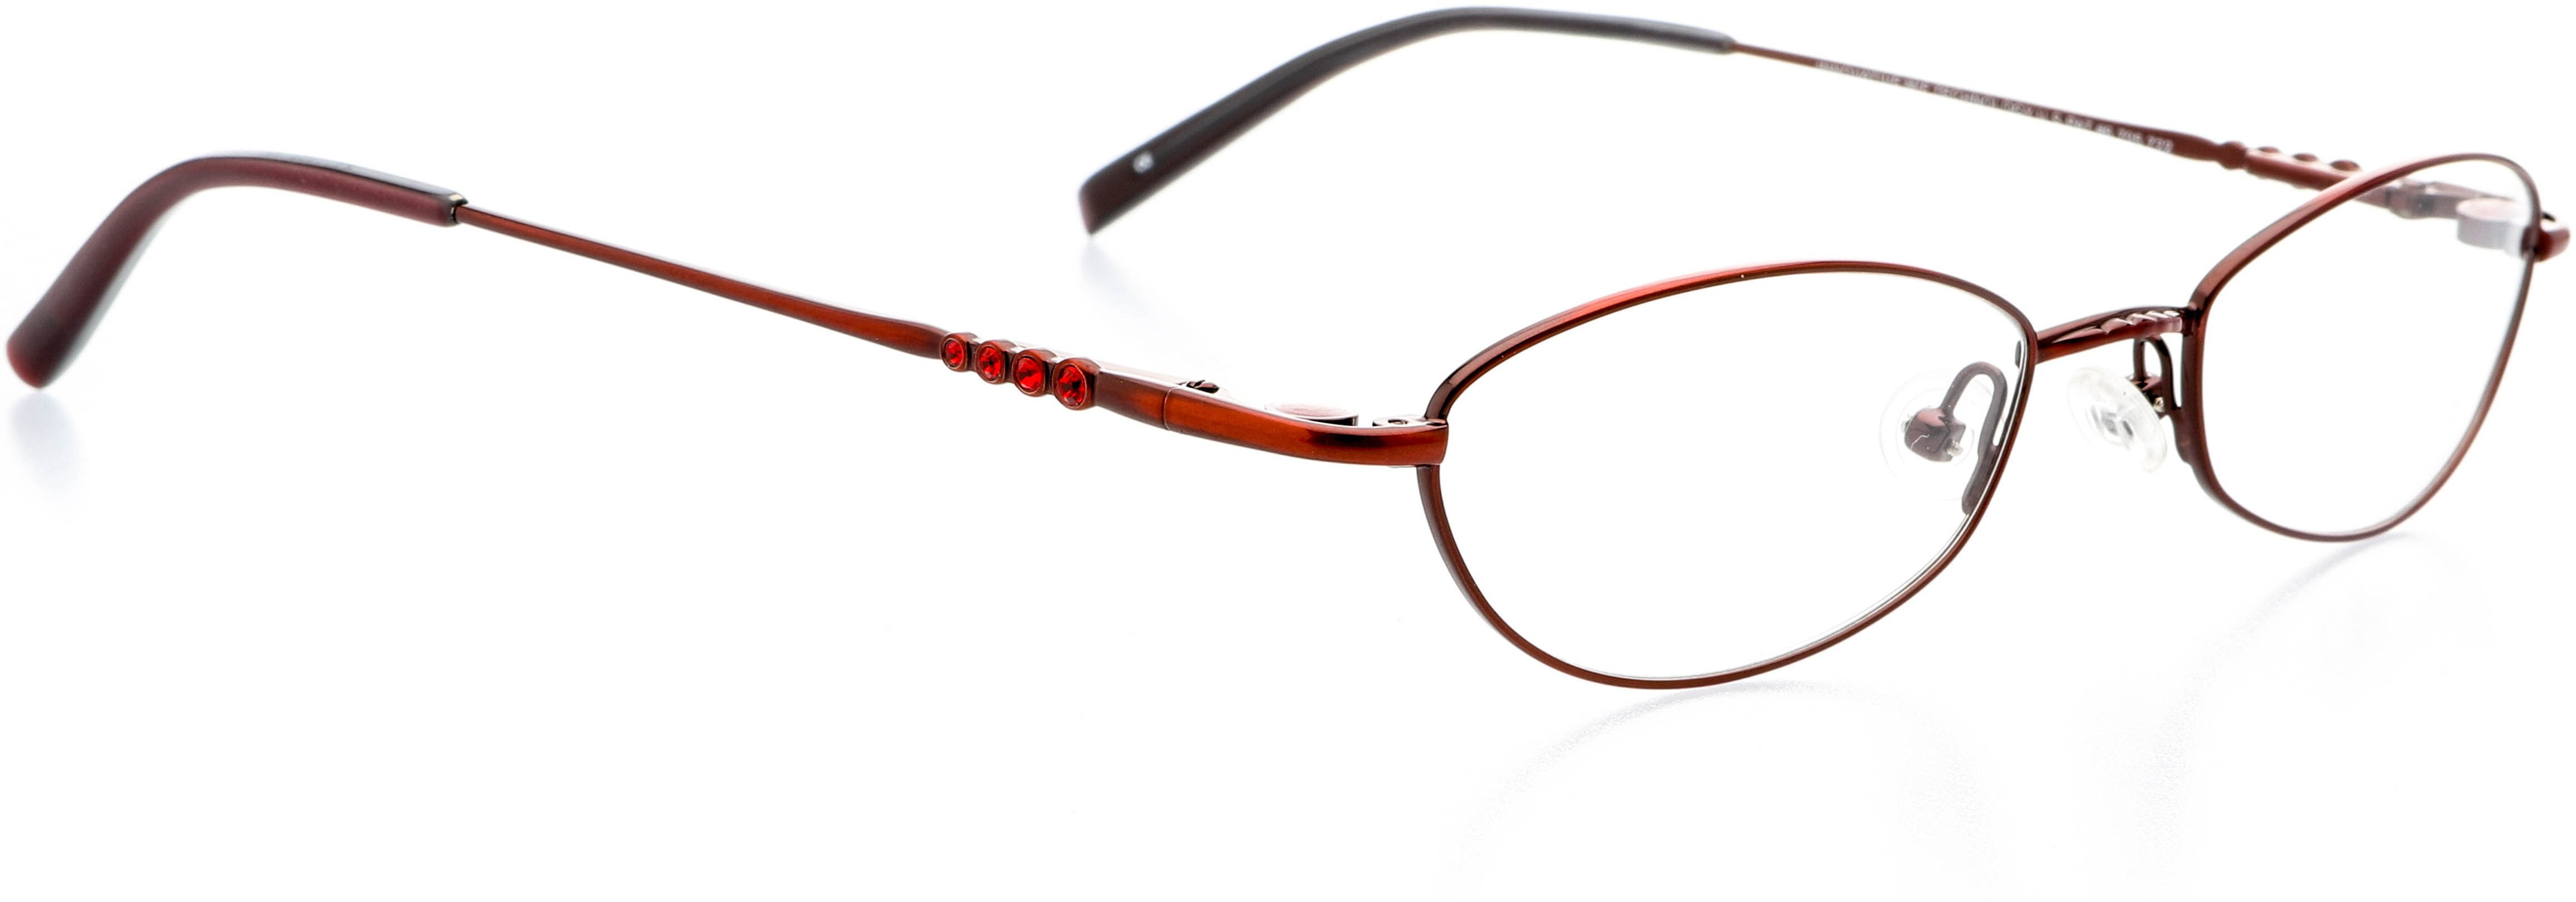 Optical Eyewear Oval Shape Metal Full Rim Frame Prescription Eyeglasses Rx Ruby Lust